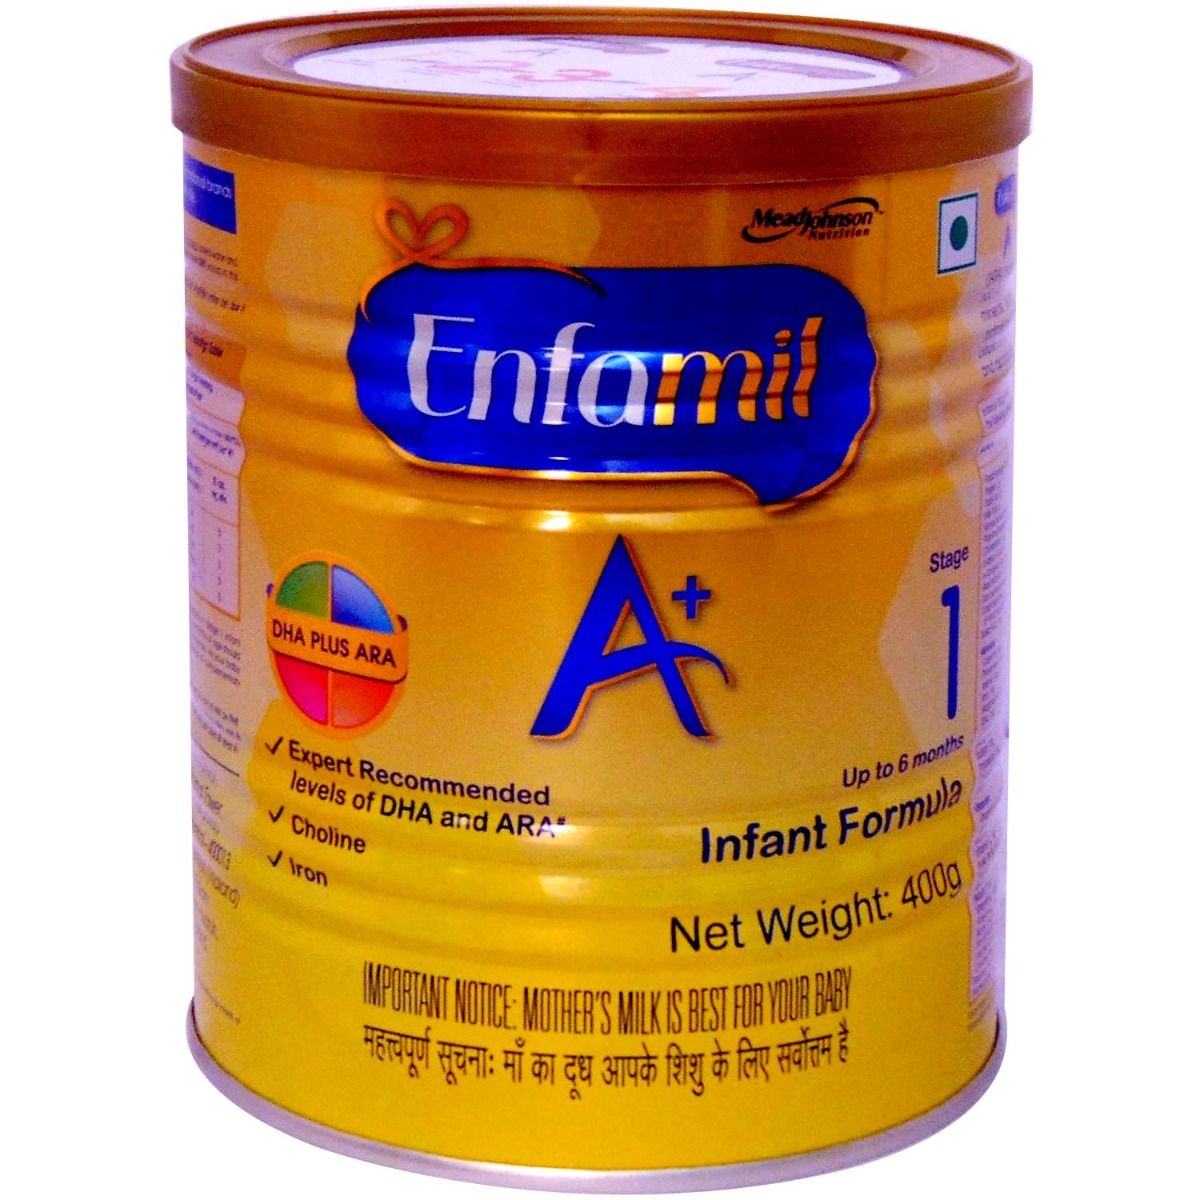 Buy Enfamil A+ Infant Formula, Stage 1, Up to 6 Months, 400 gm Tin Online